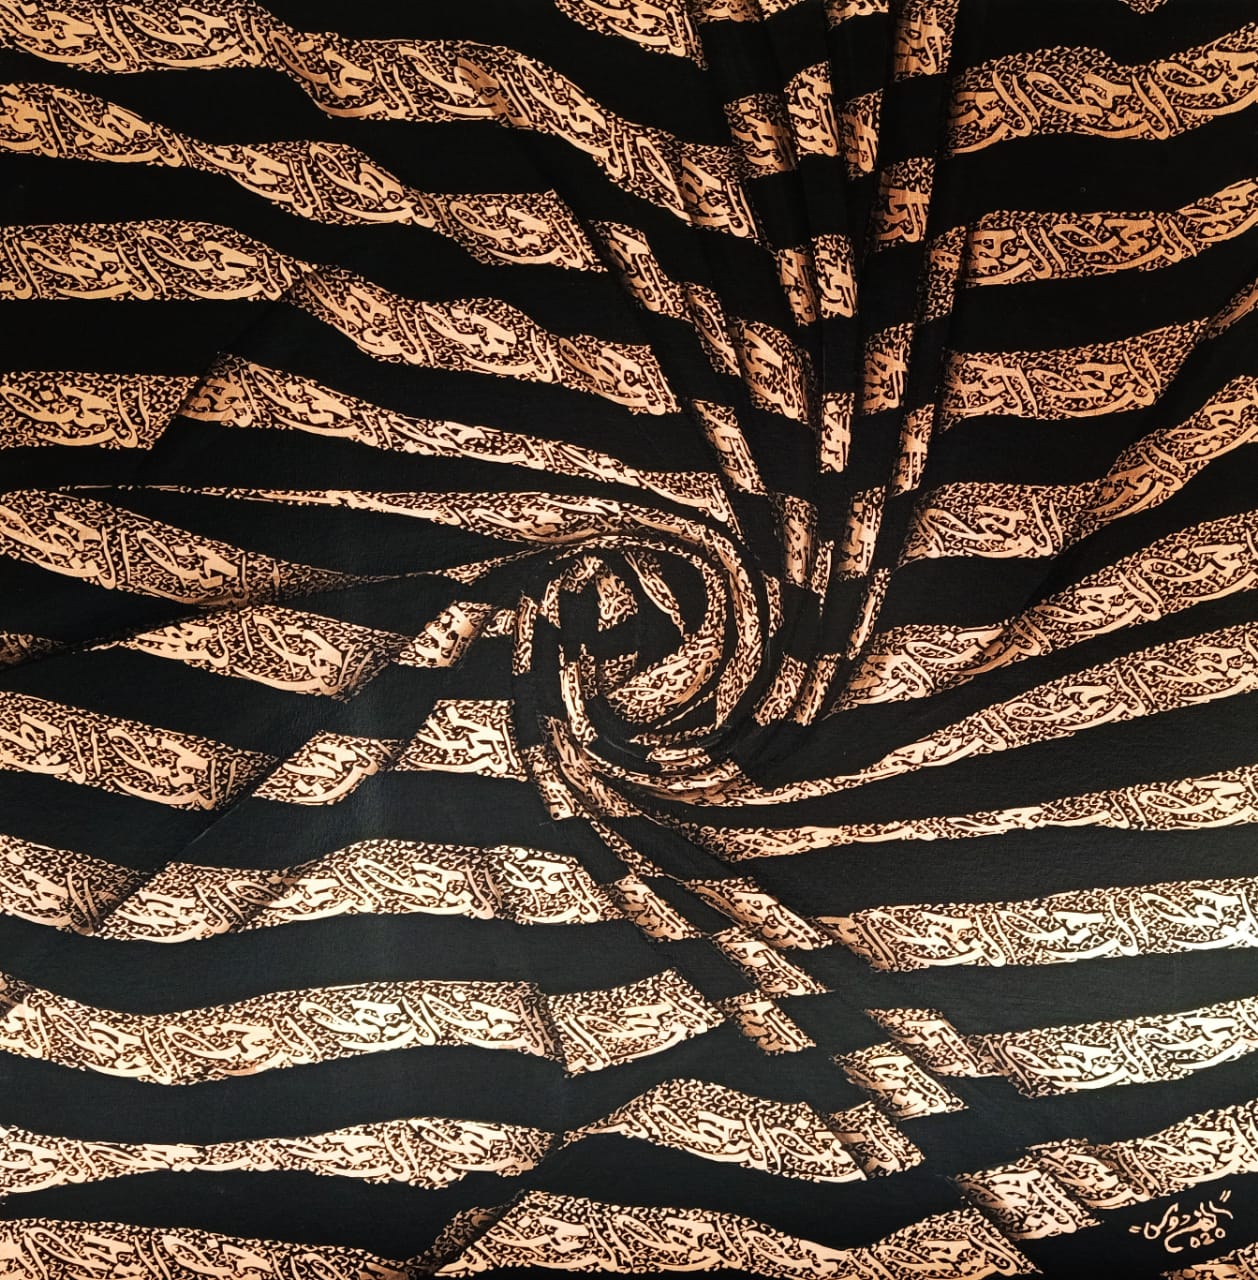 AL FirdousALREHMAN ALRAHEEM<br></br>Acrylics and Copper on Canvas<br></br>30x30 inches